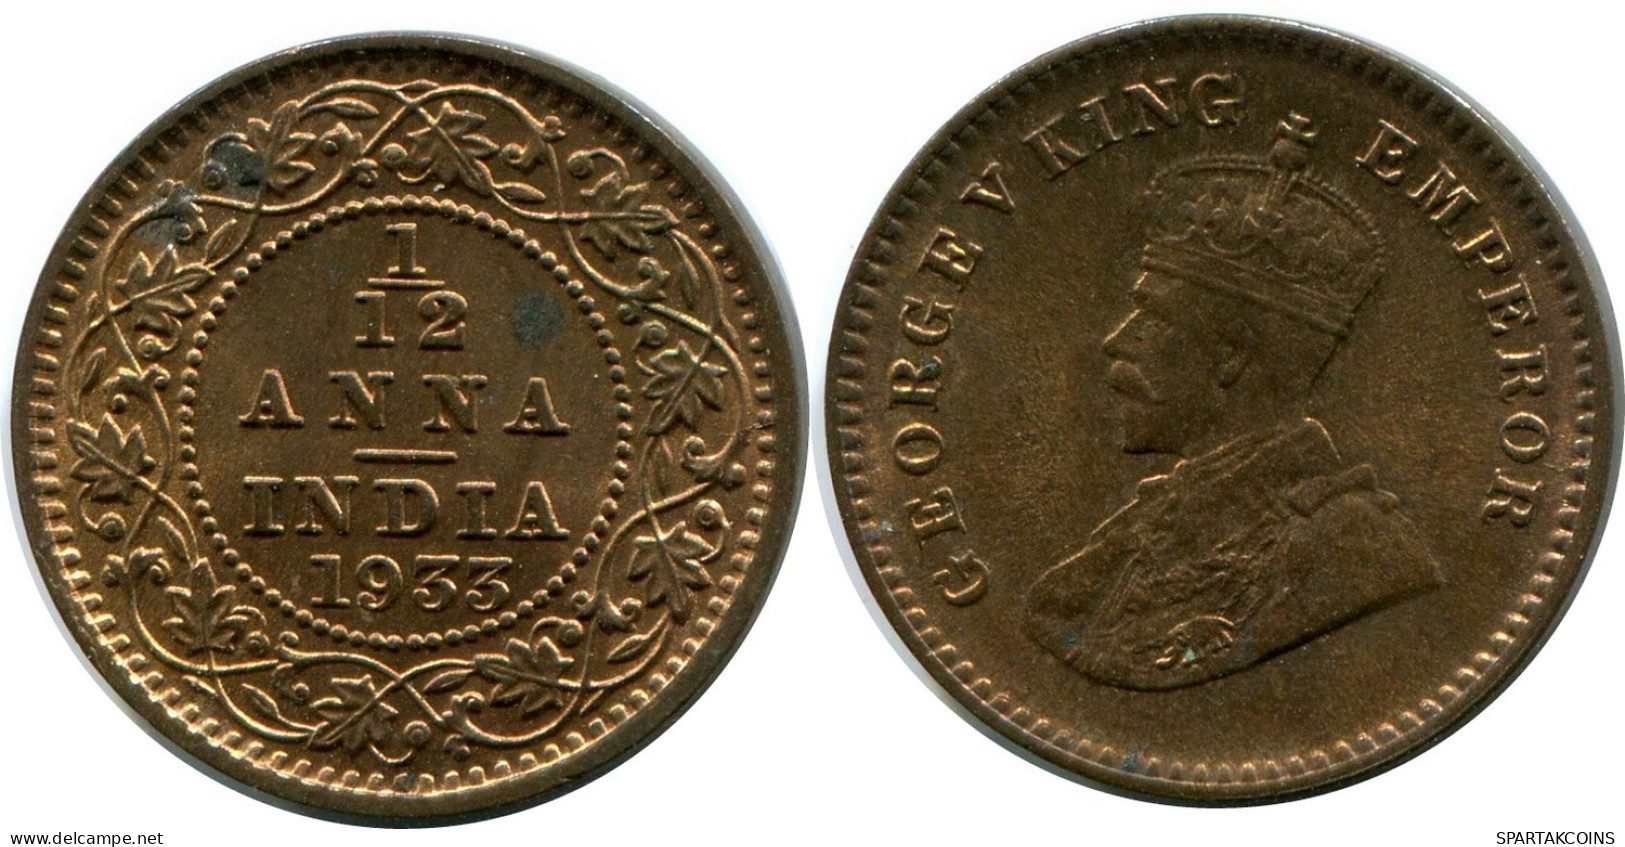 1/2 ANNA 1933 INDIA Coin #AY250.2.U.A - India